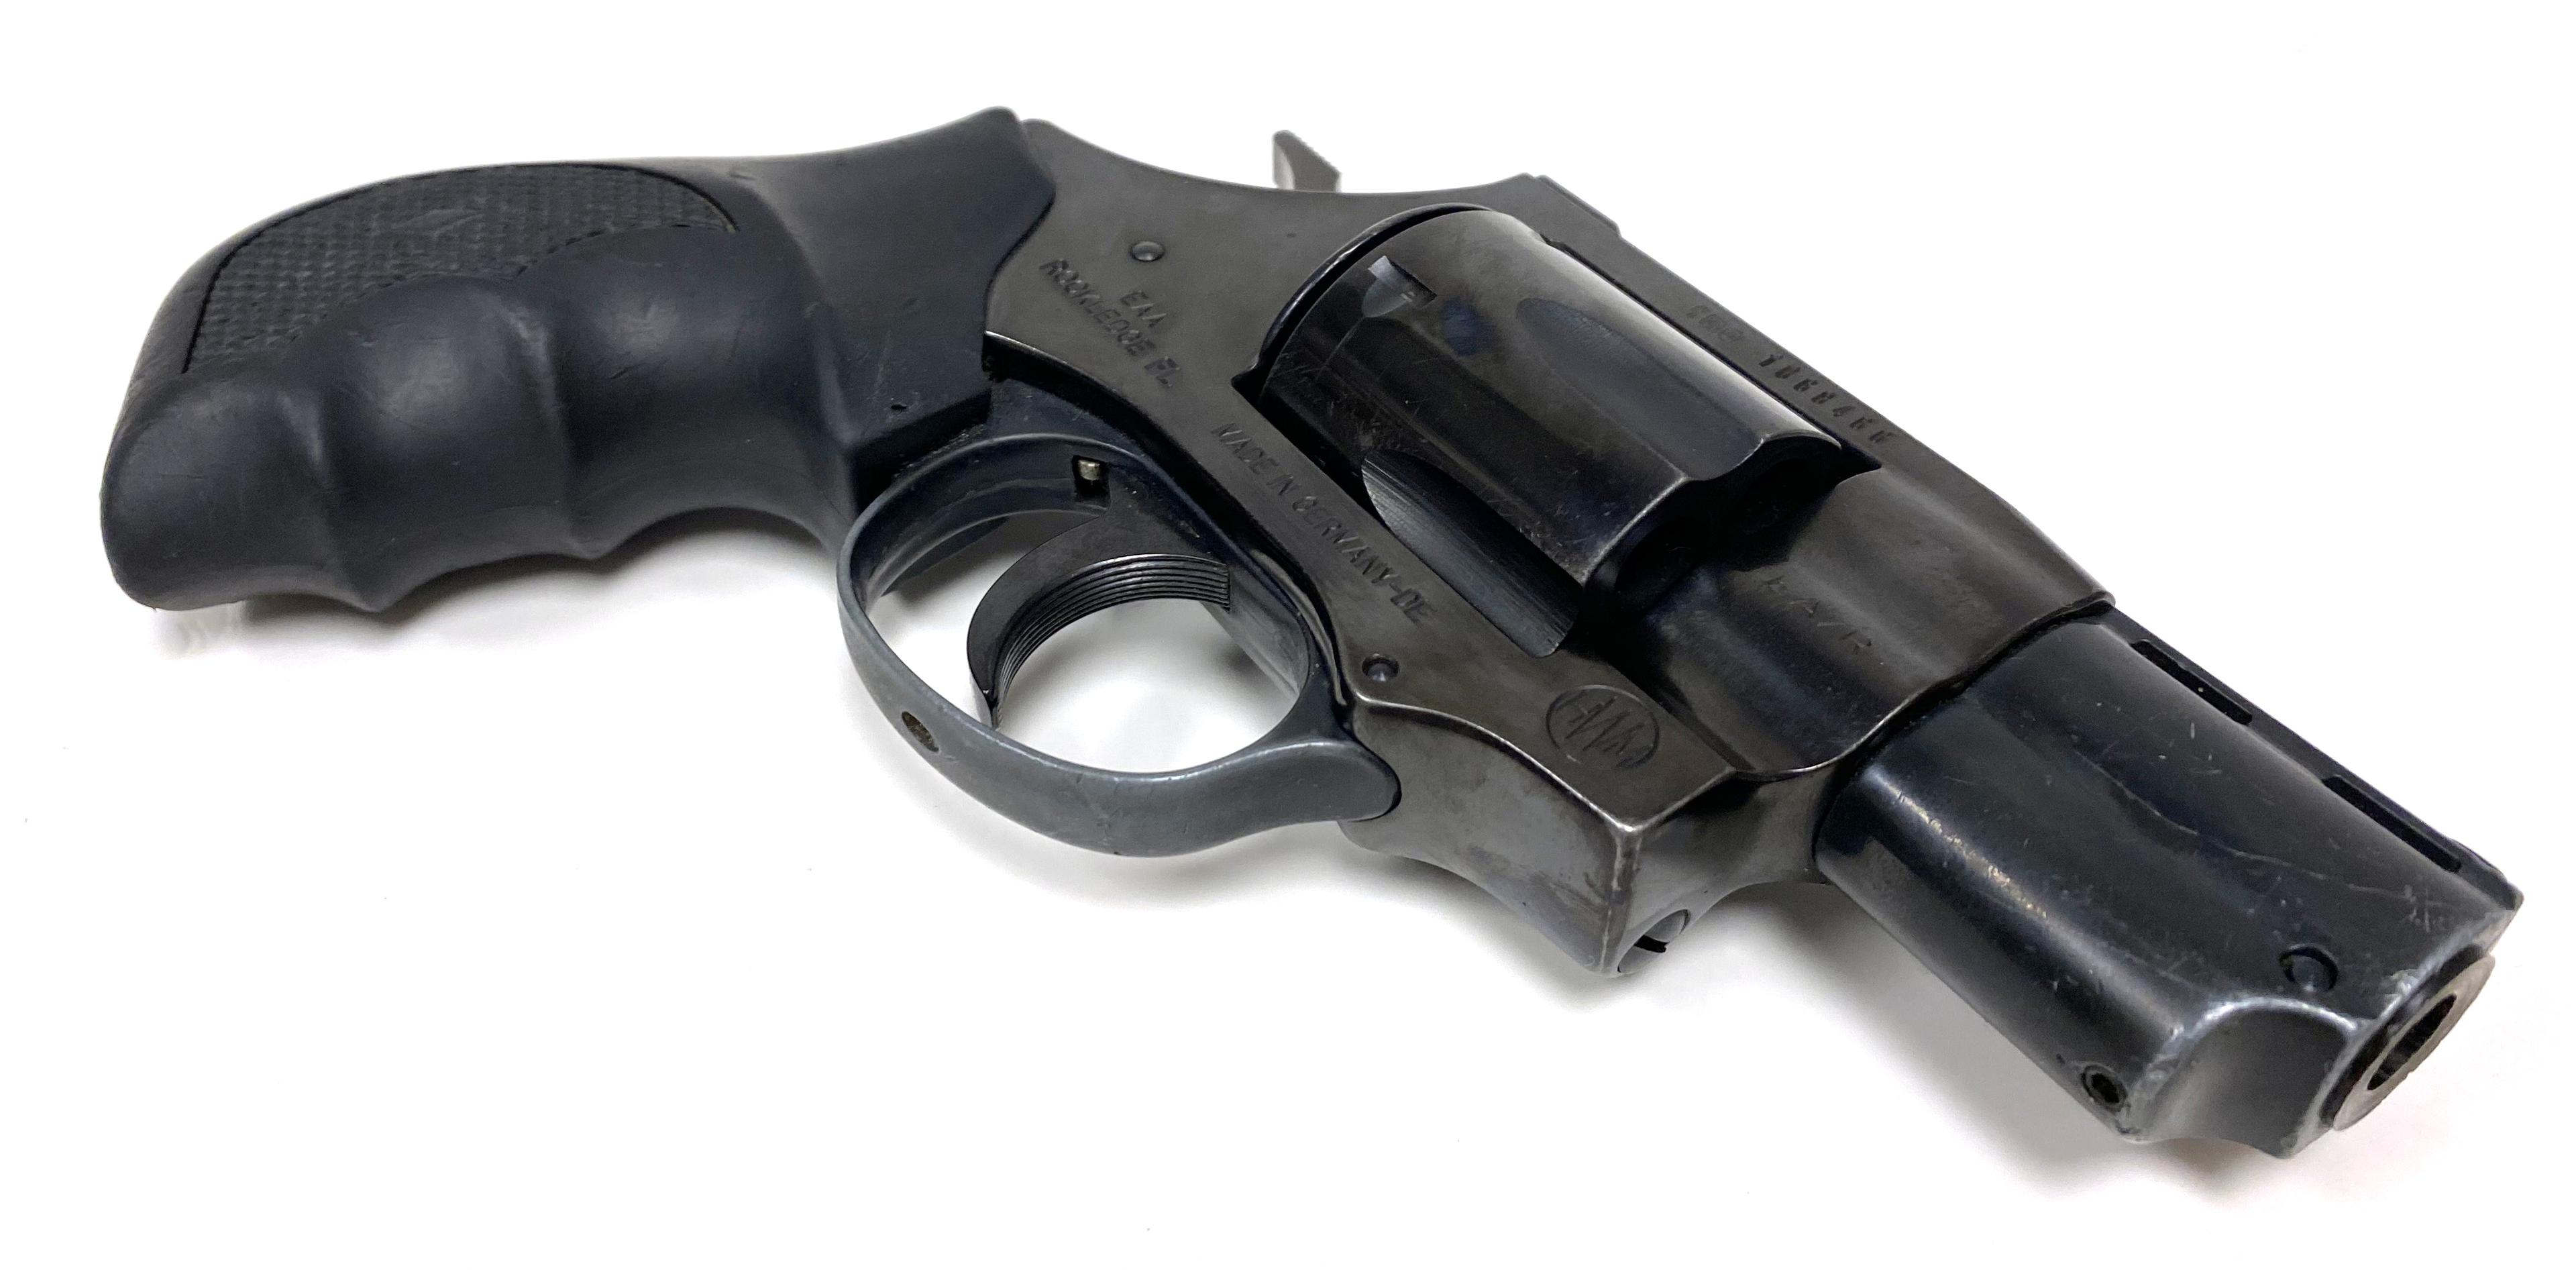 HWM Windicator .357 MAG/.38 SPL Snub Nose Revolver